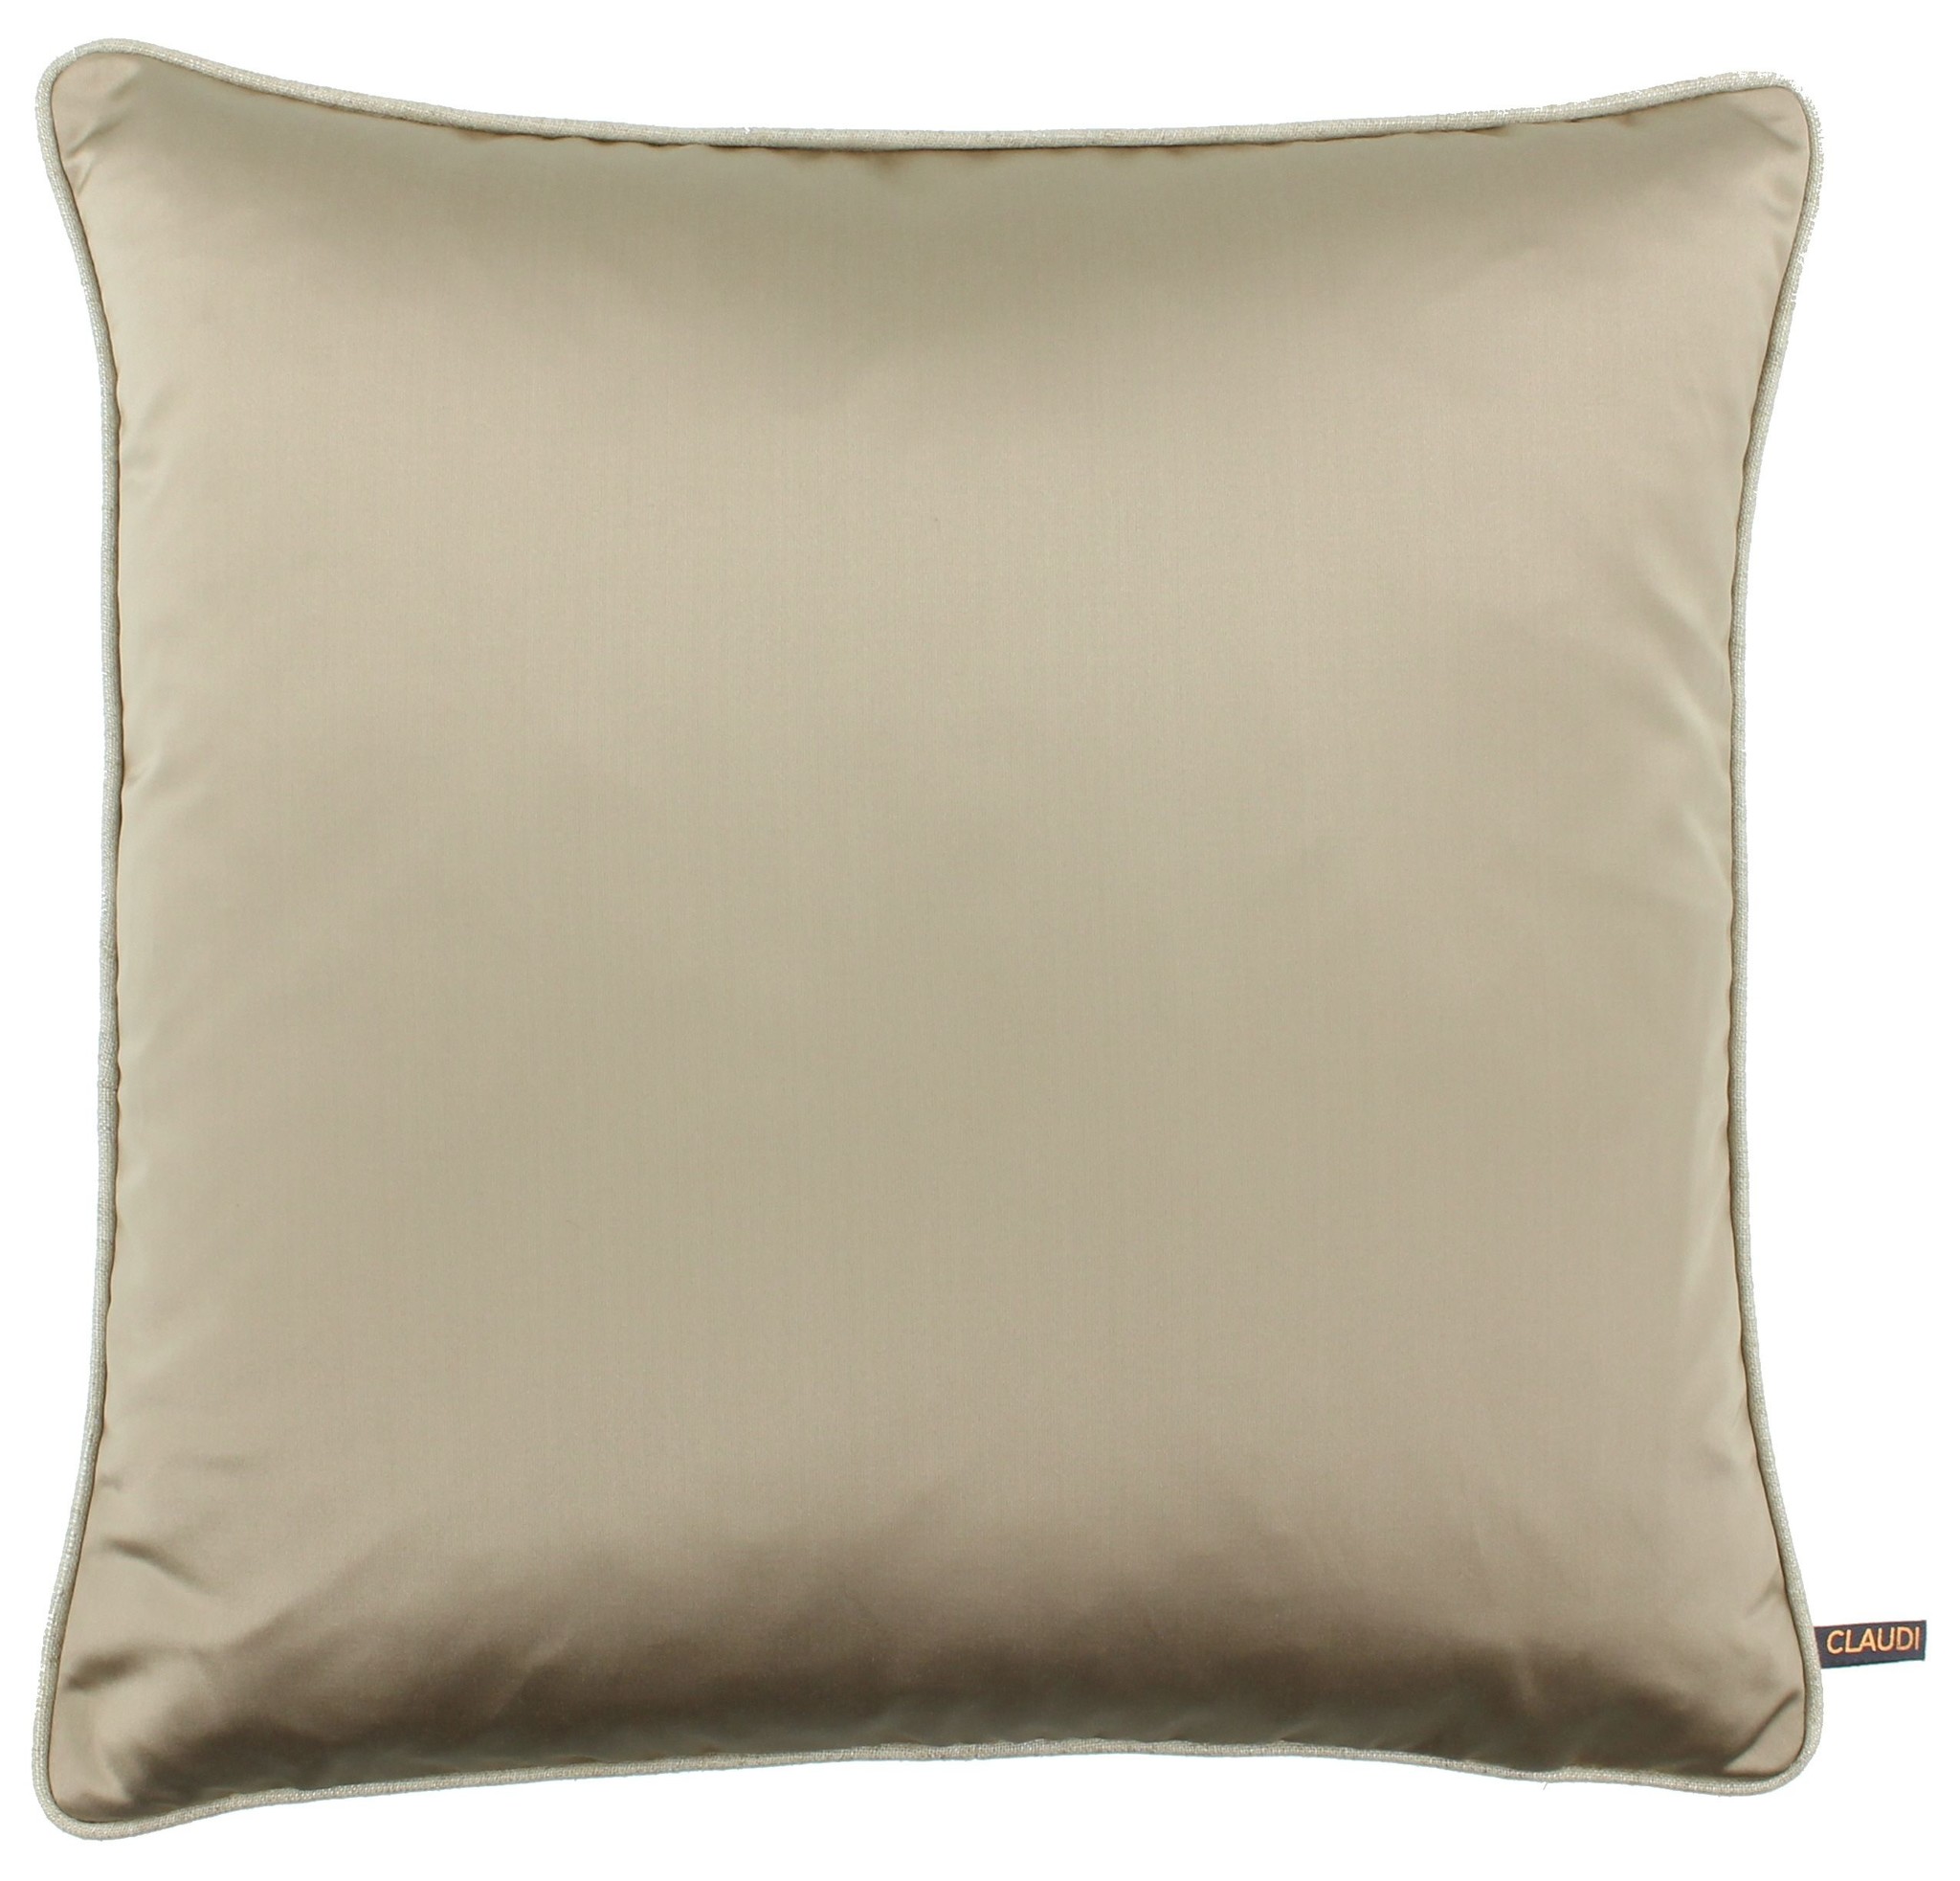 Claudi cushion 'Dafne' - Wilhelmina Designs